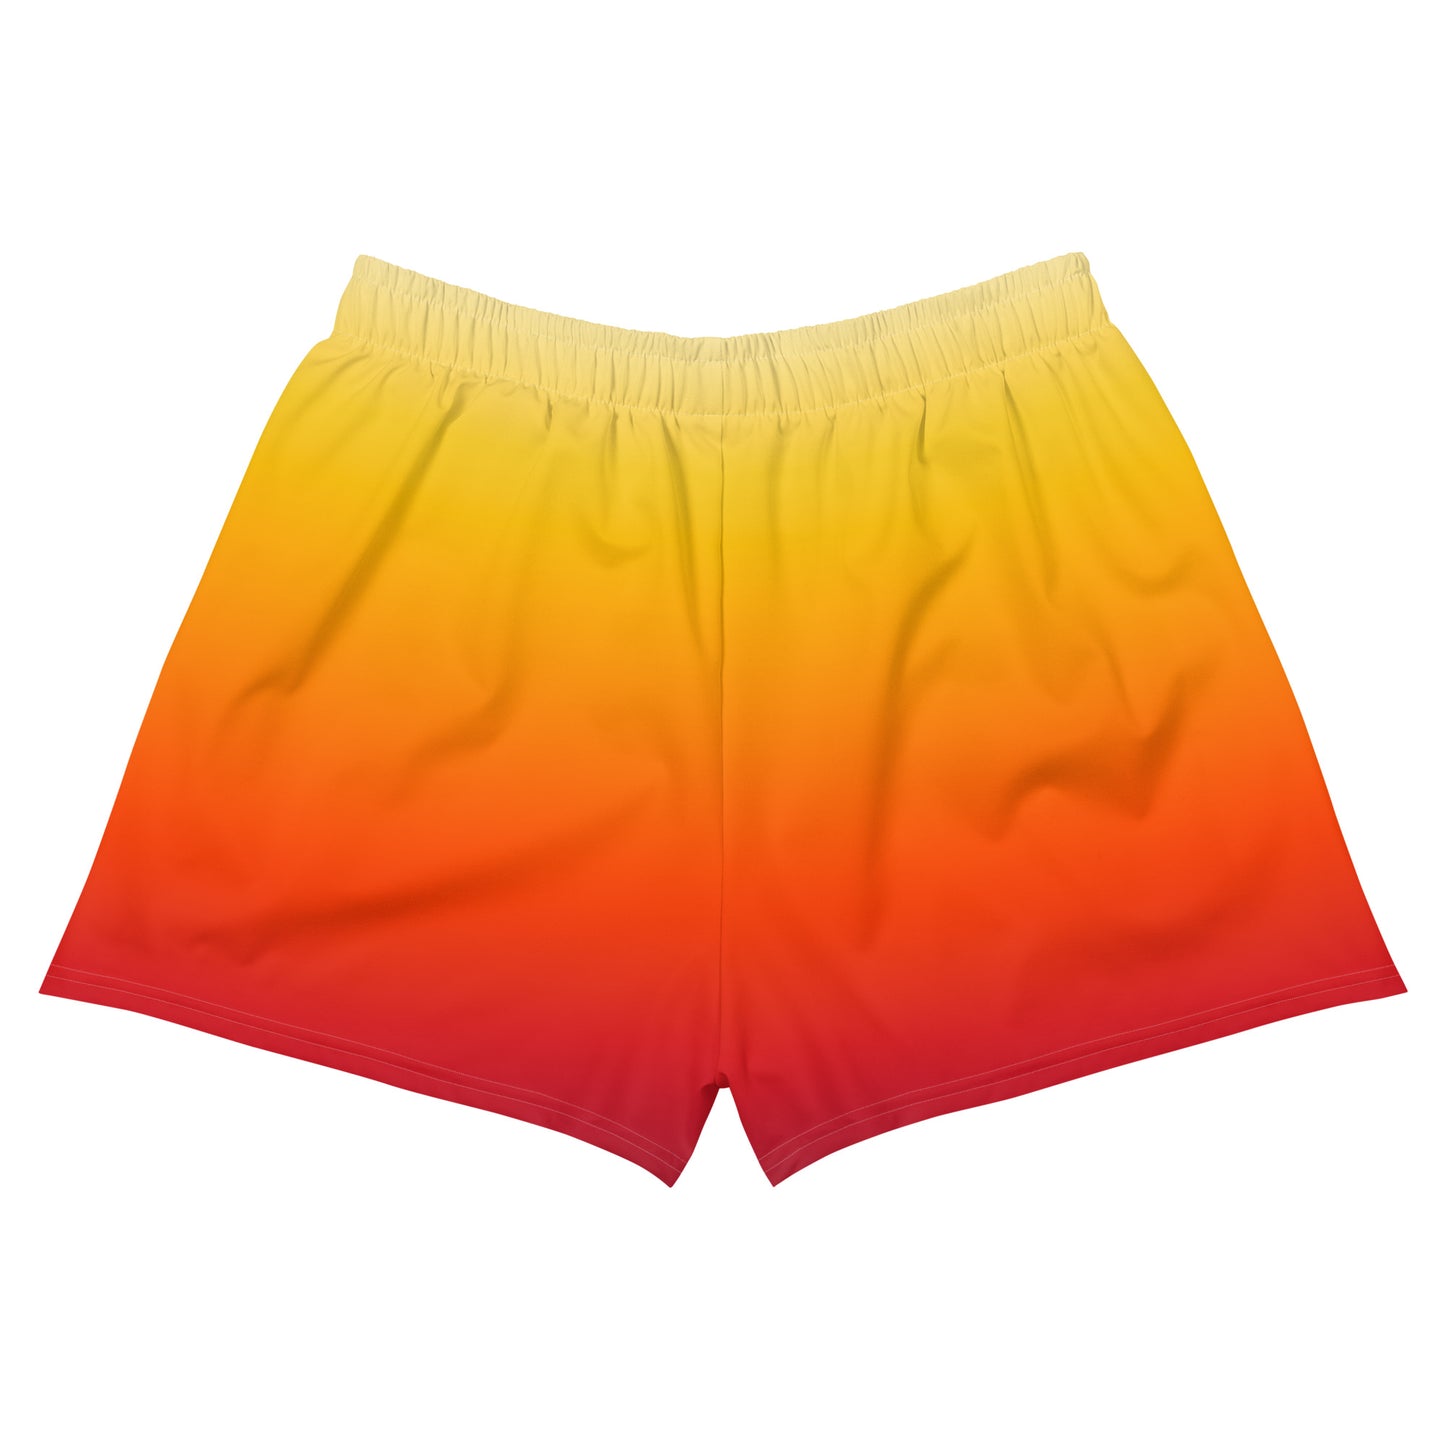 I Train to Make Men Hard Athletic Shorts (Short)